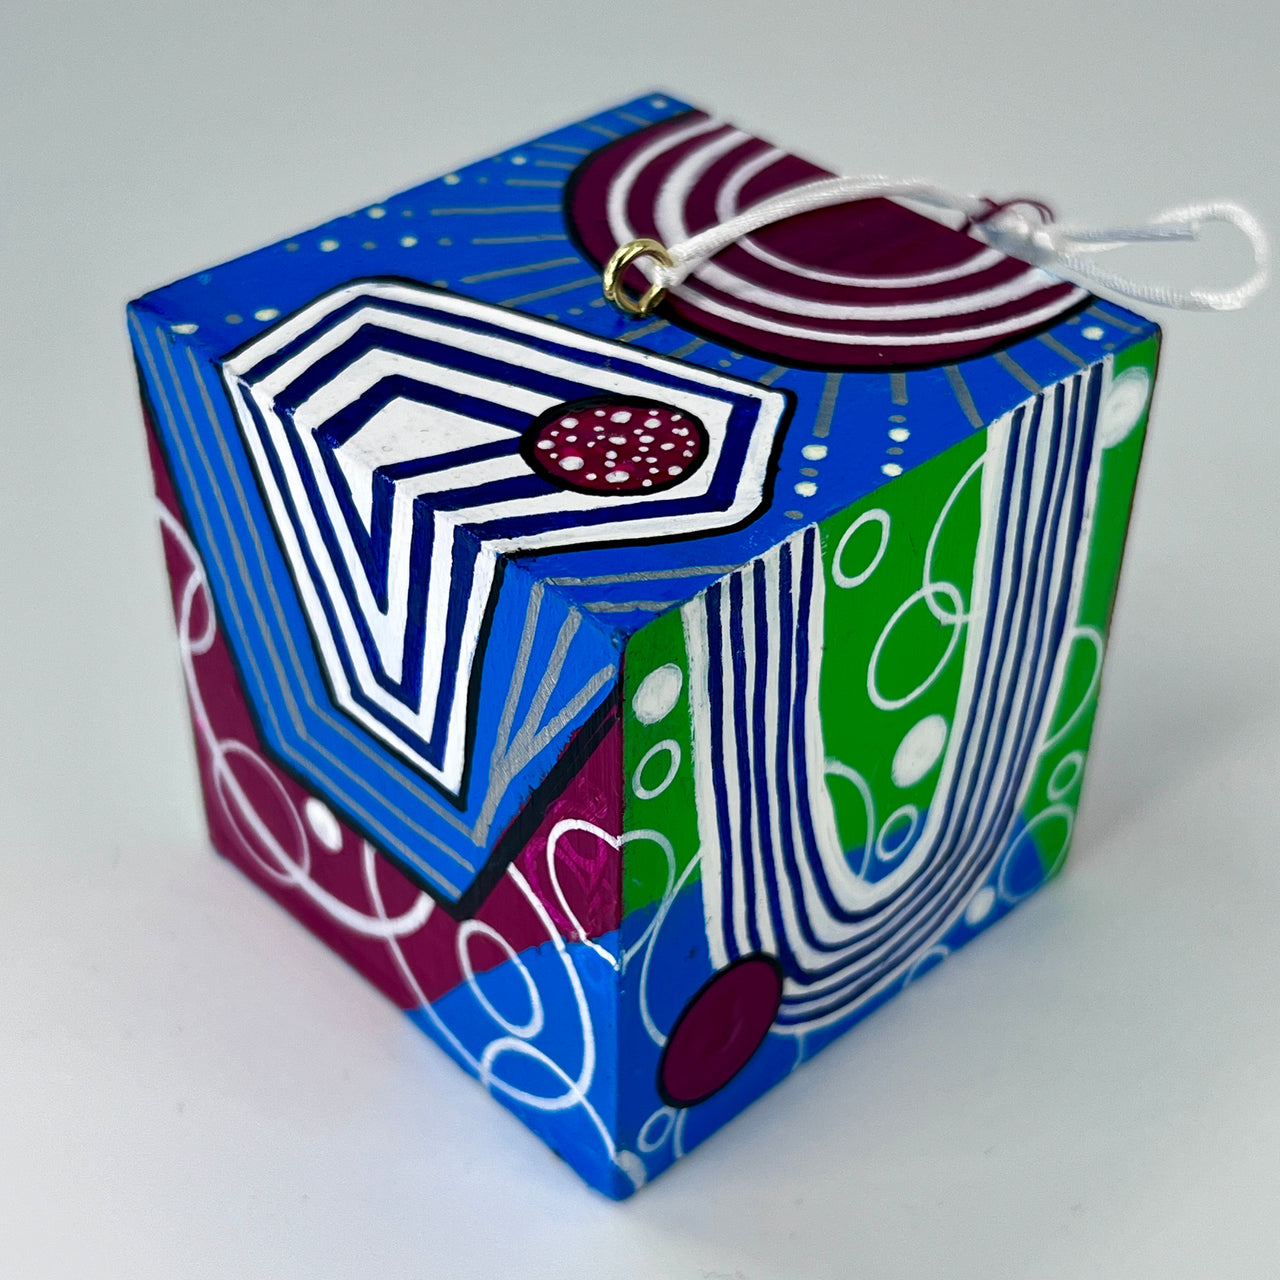 #24 - 3D Cube Art - 2.25" cube